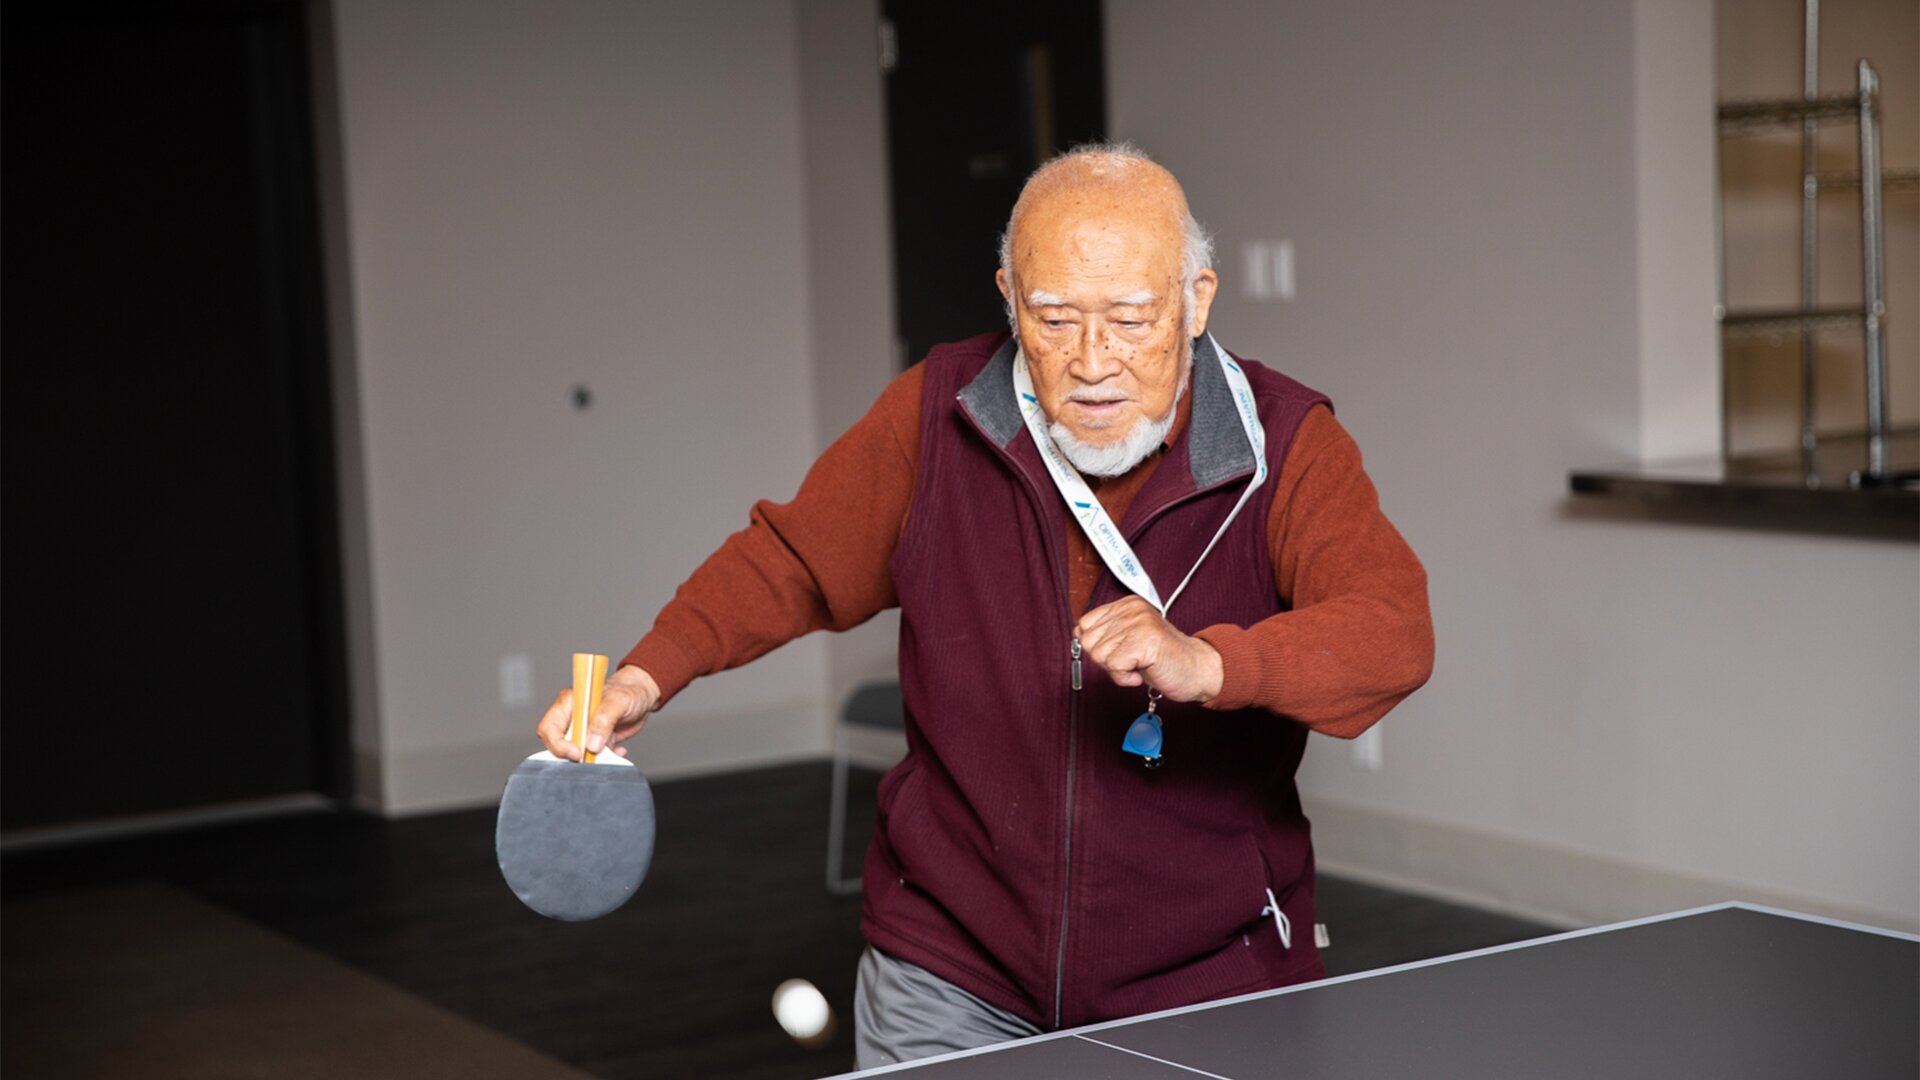 An elderly man playing ping pong, a fun activity for seniors